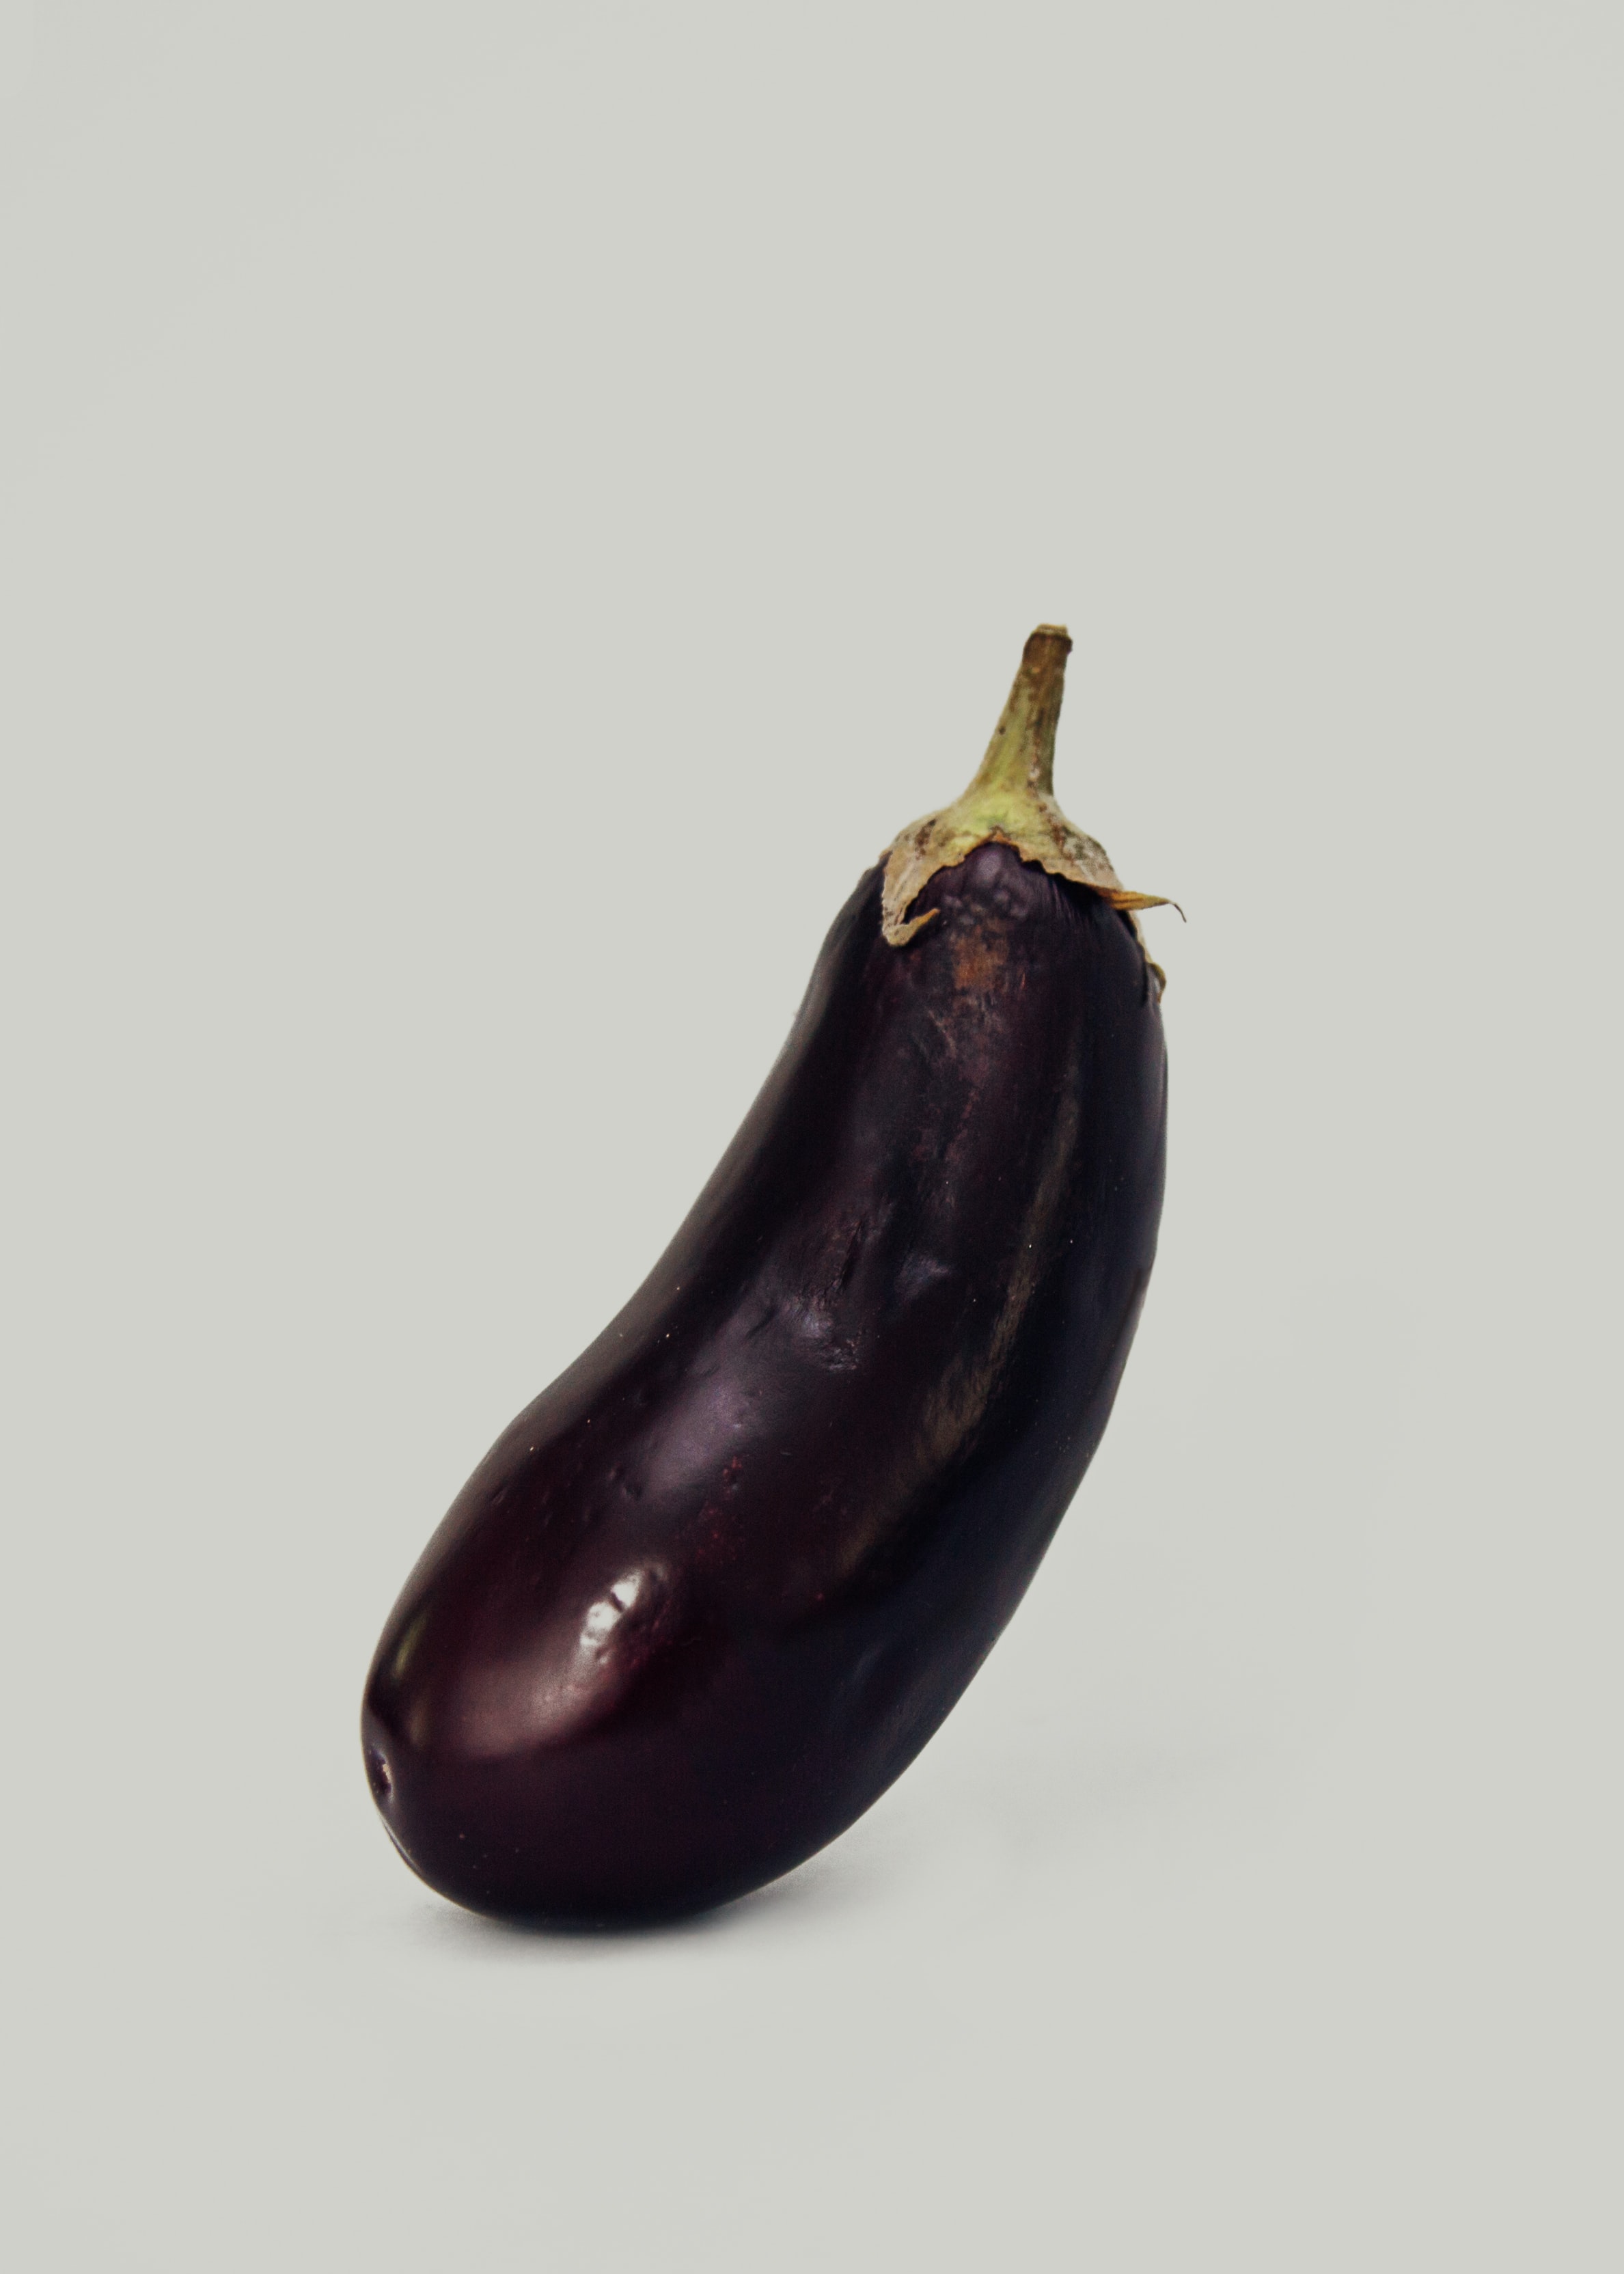 eggplant wallpaper,eggplant,vegetable,plant,food,produce